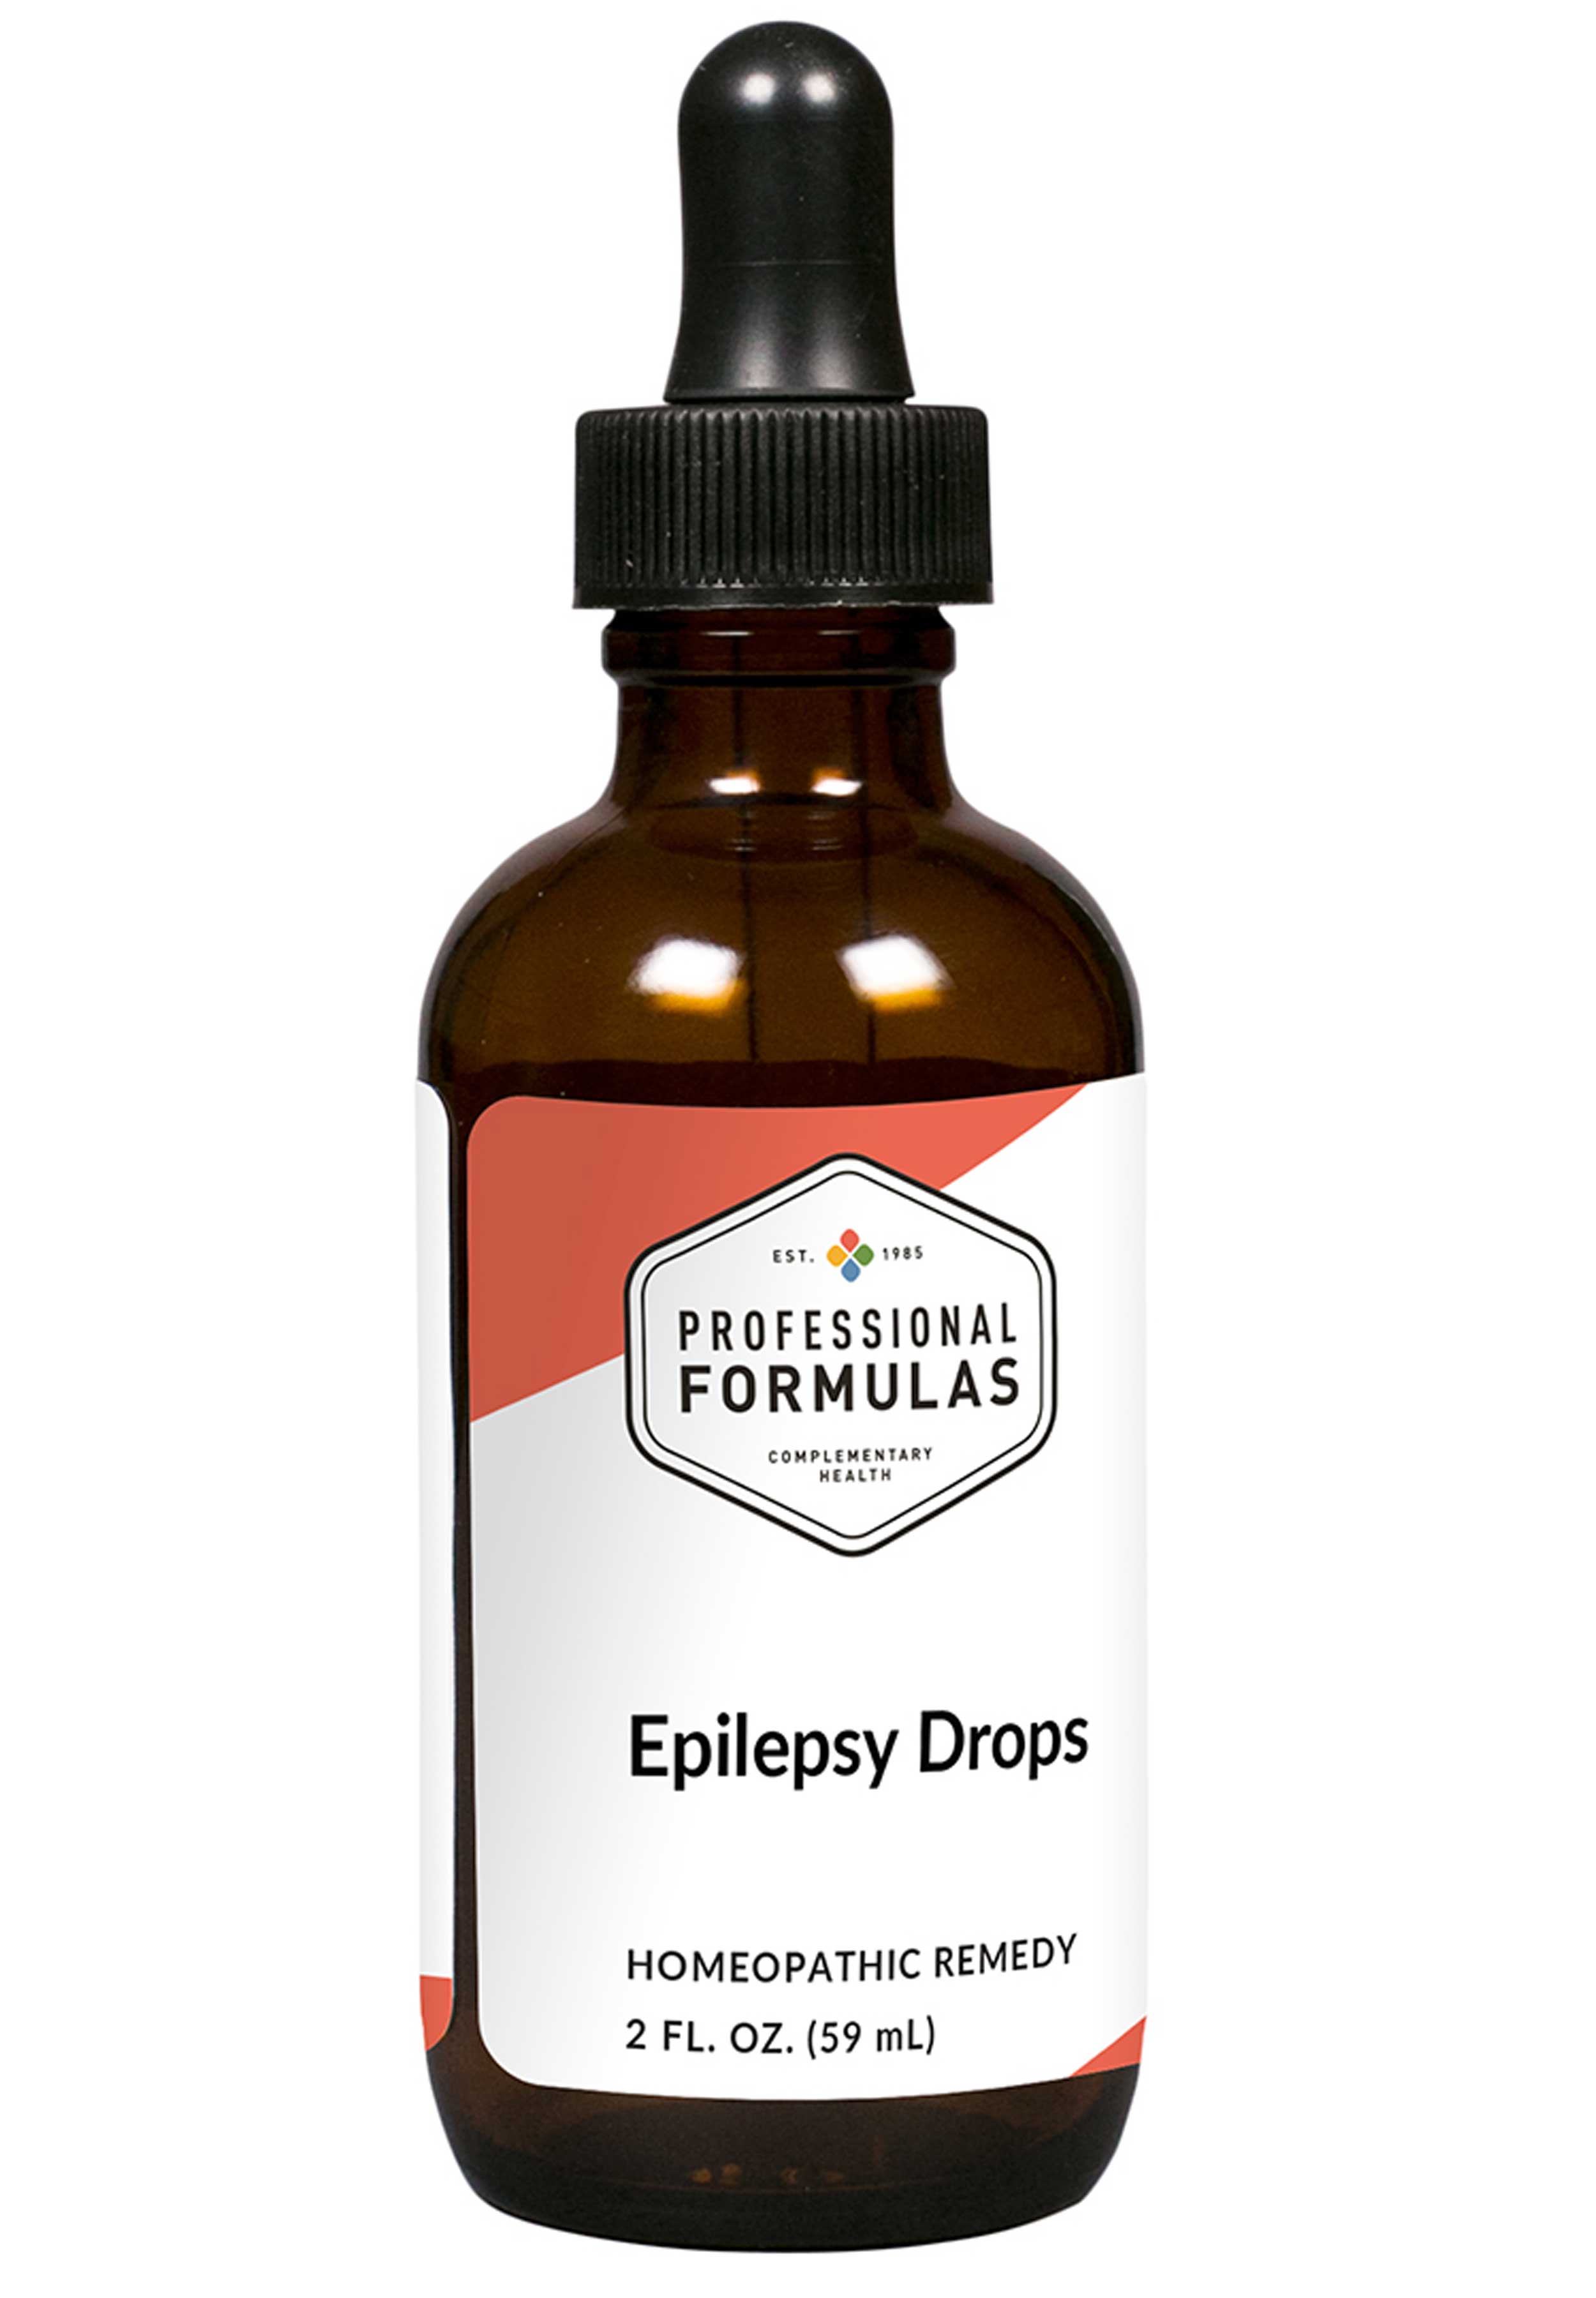 Professional Formulas Epilepsy Drops